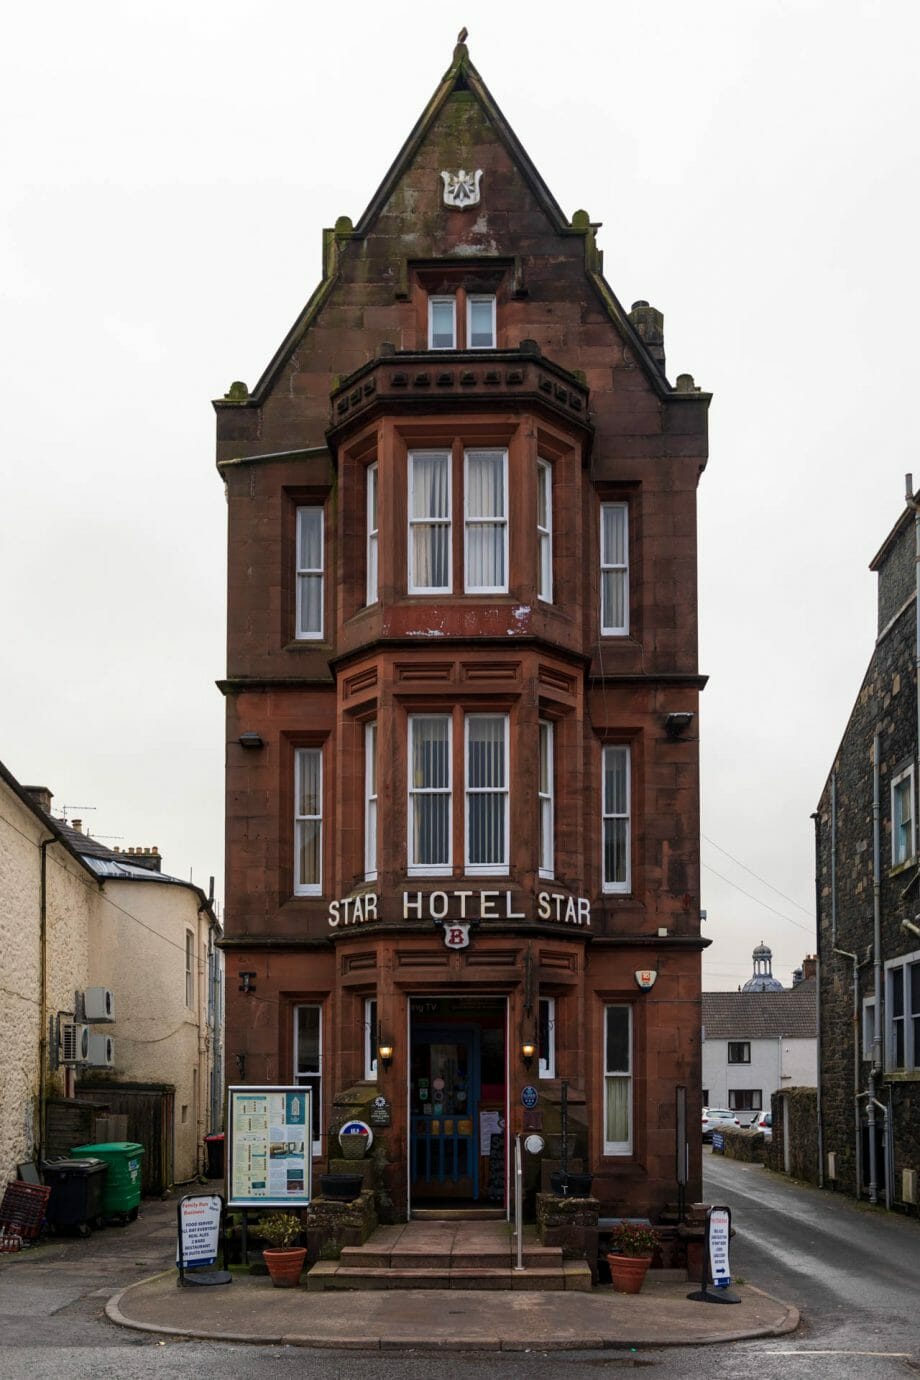 Start Hotel in Moffat